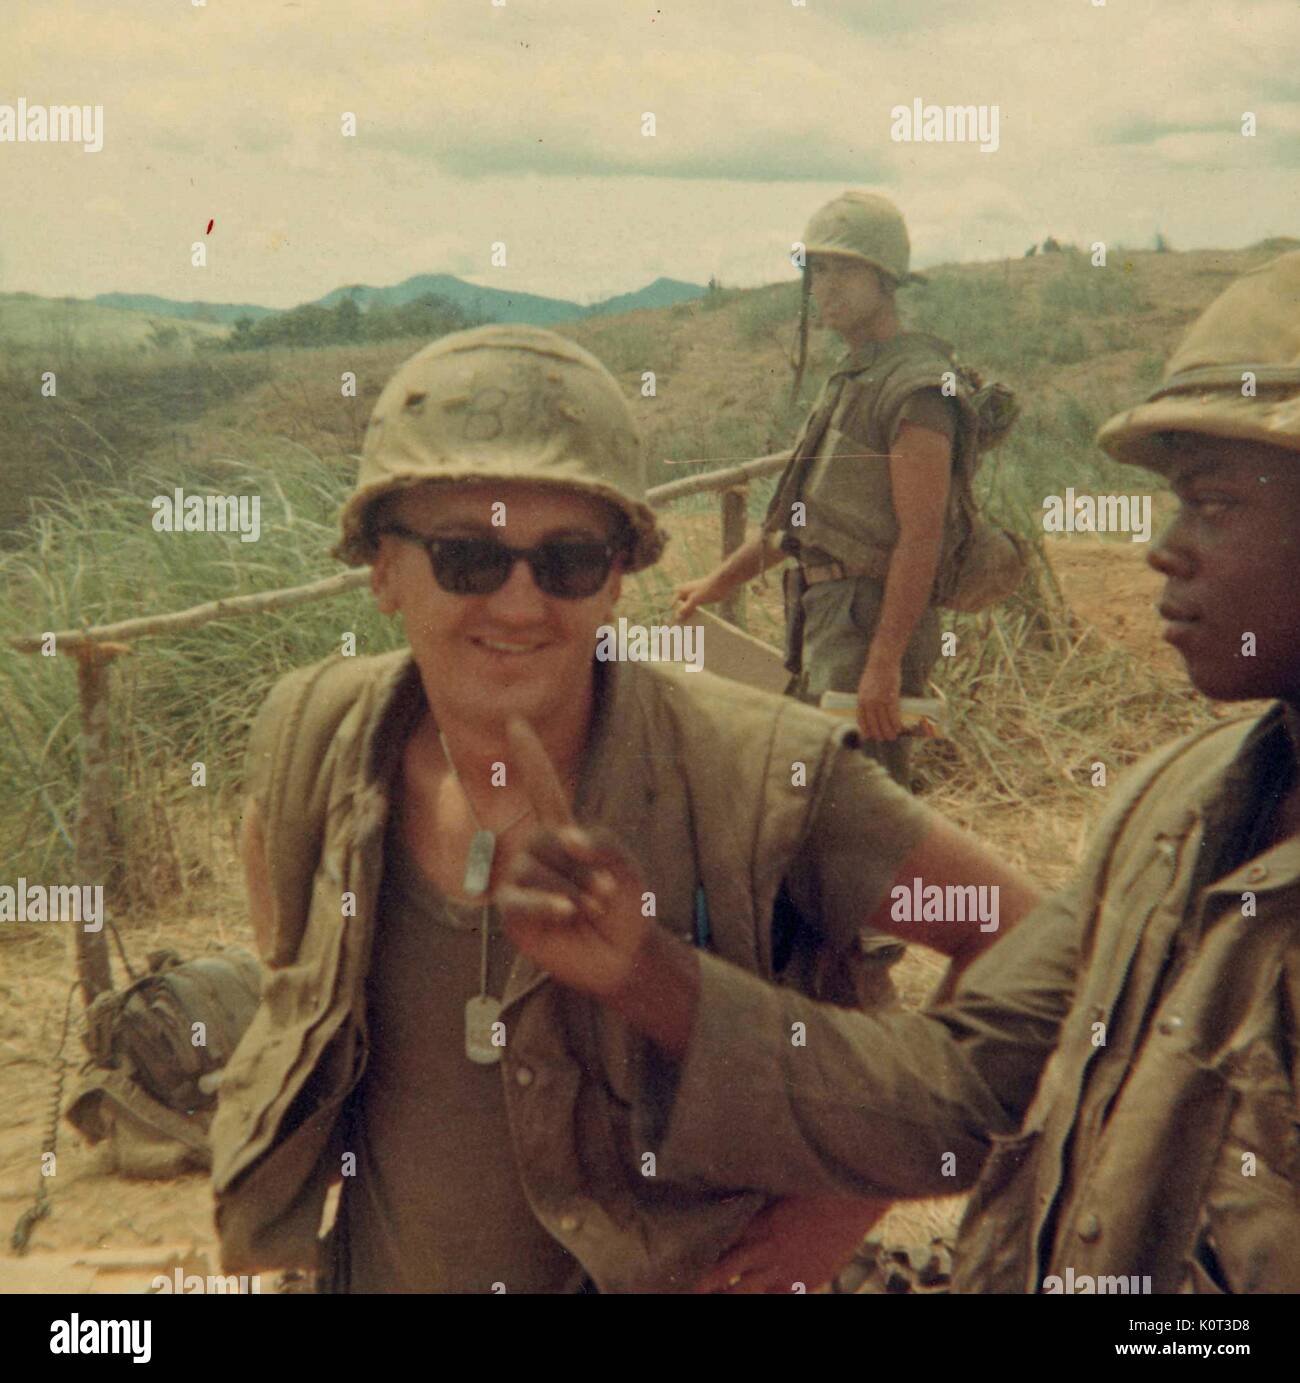 Us Army Vietnam Sunglasses Art